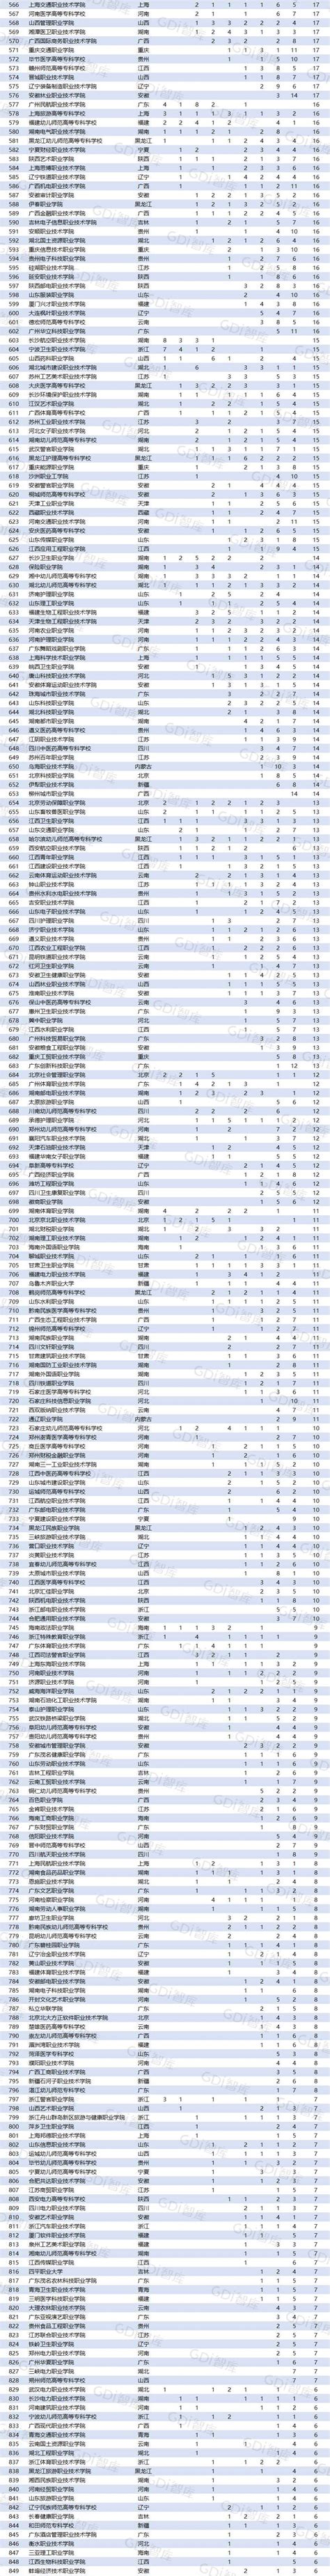 GDI高职专科专业评估榜（2023）发布 广东C档及以上专业院校数量居前列_南方网